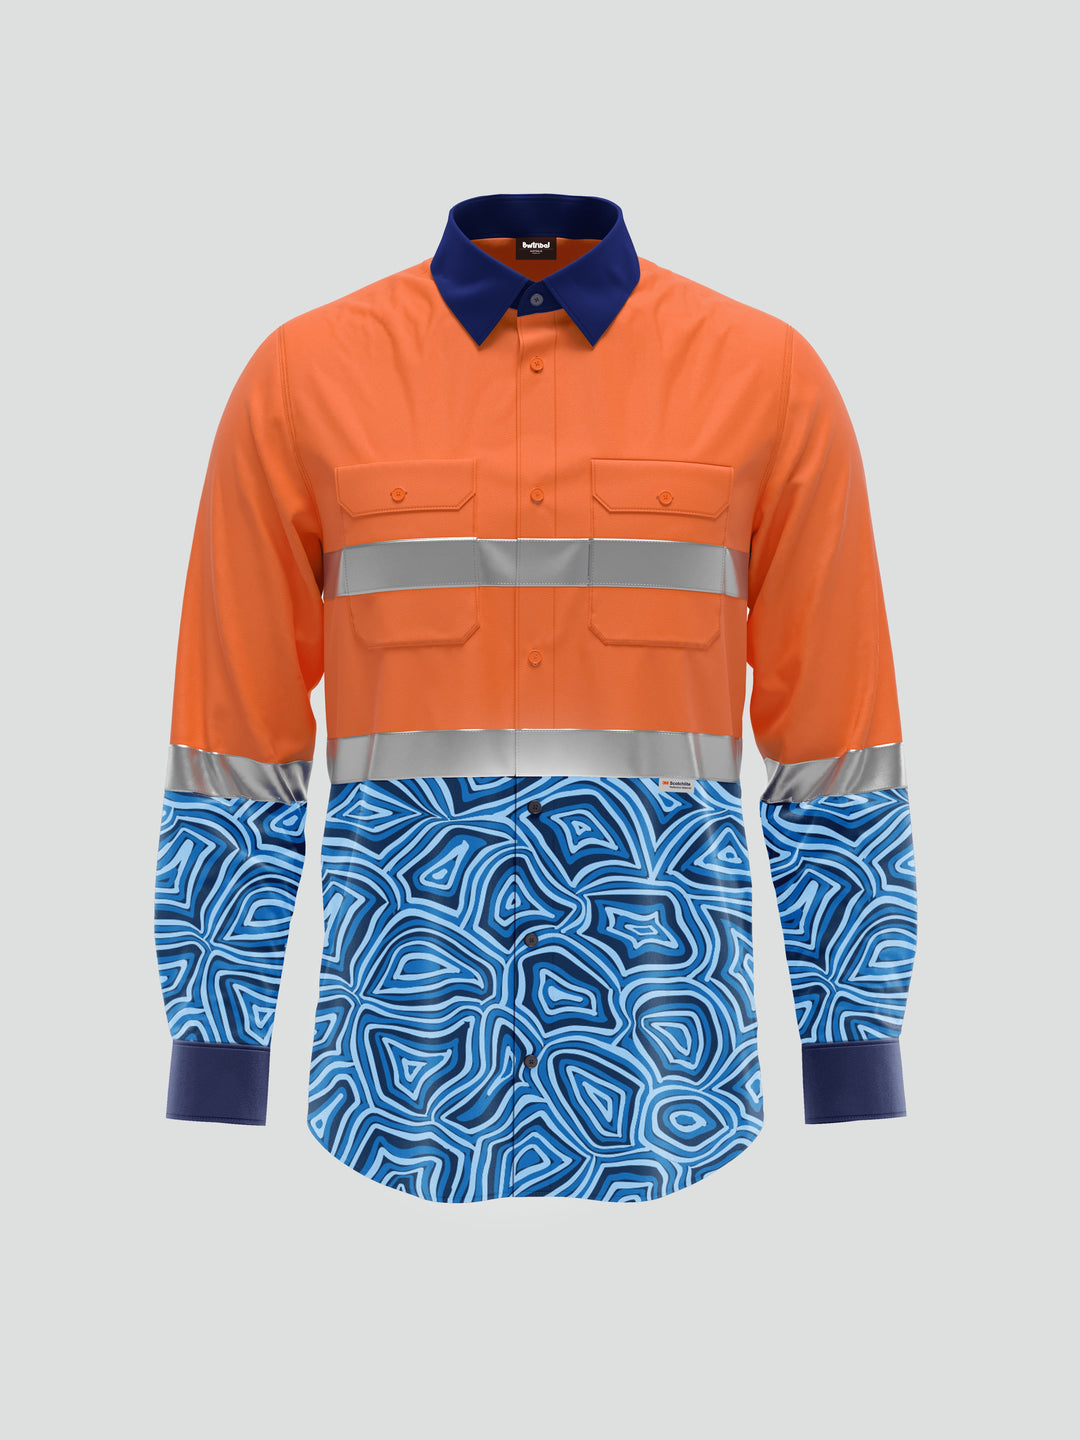 Blue Oyster - Corporate Hi-Vis Unisex Workwear Shirt